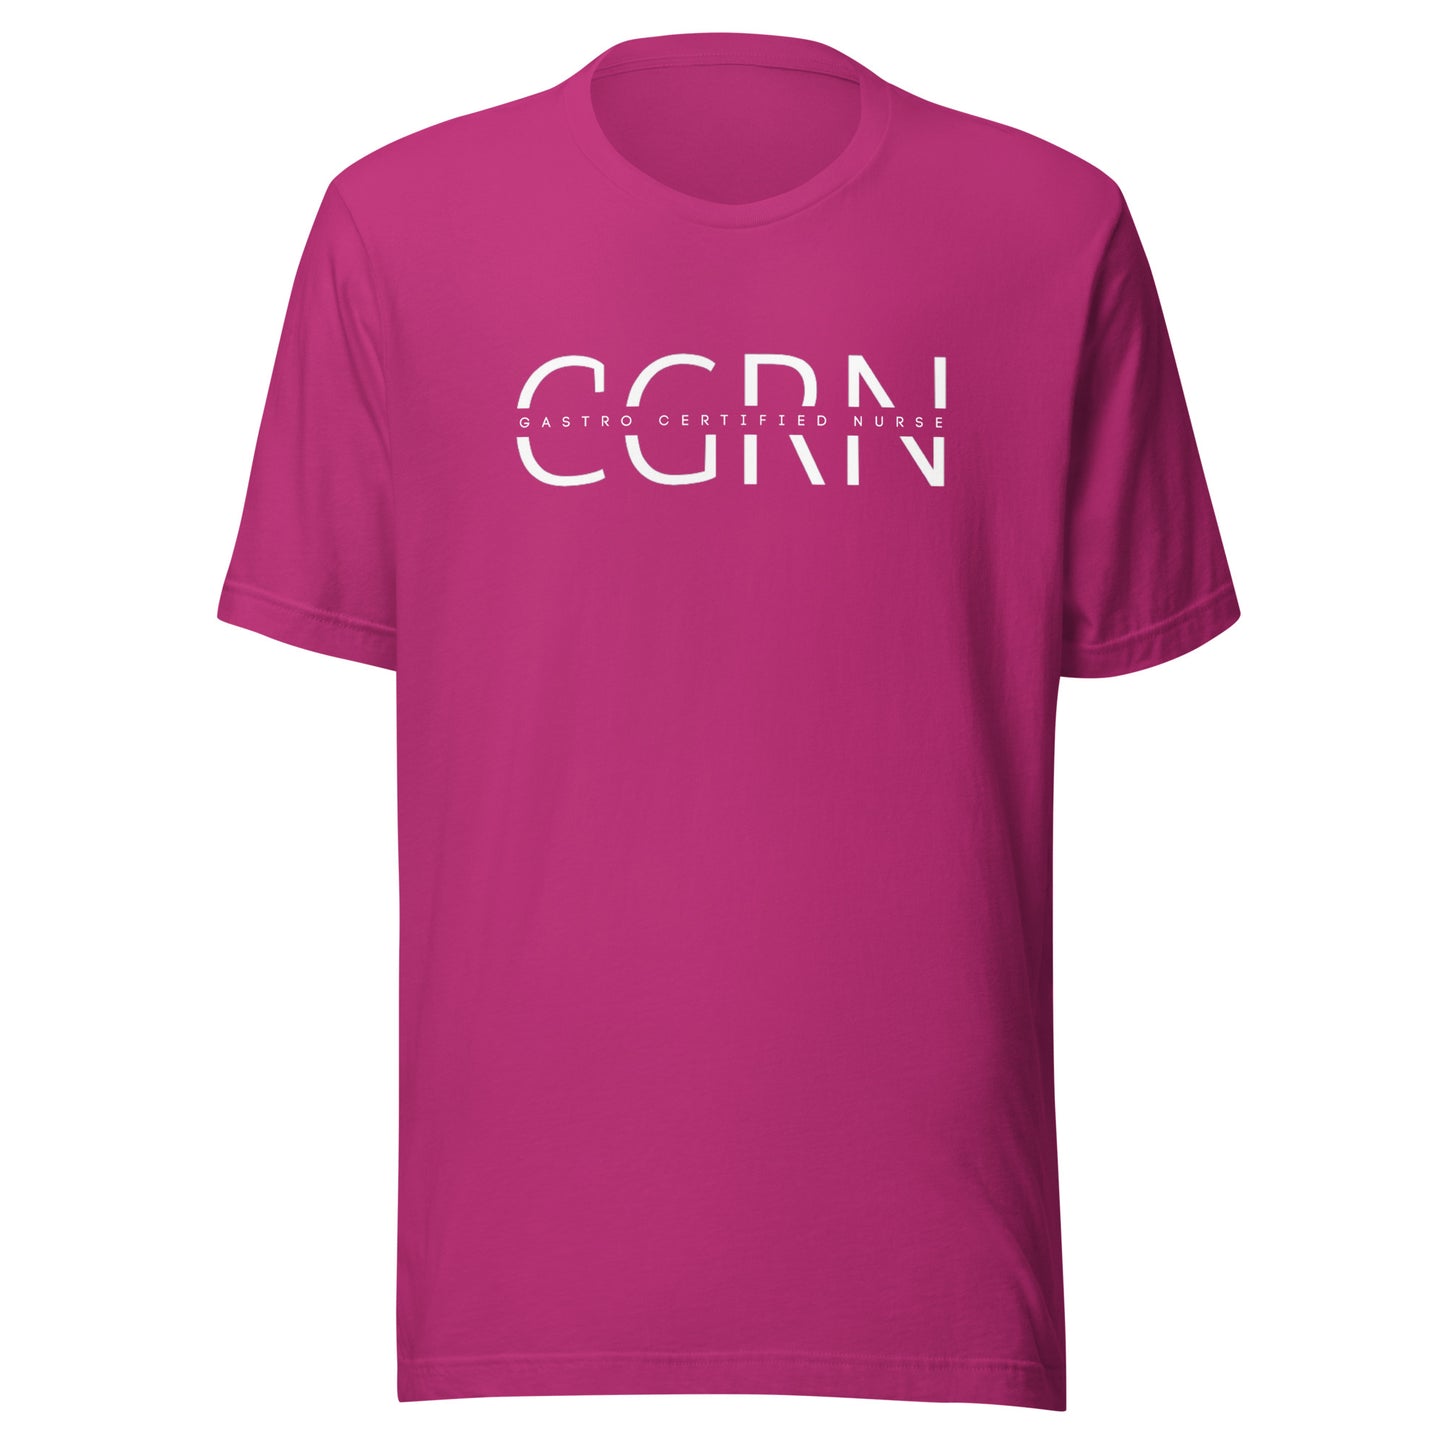 CGRN Certified Gastro t-shirt